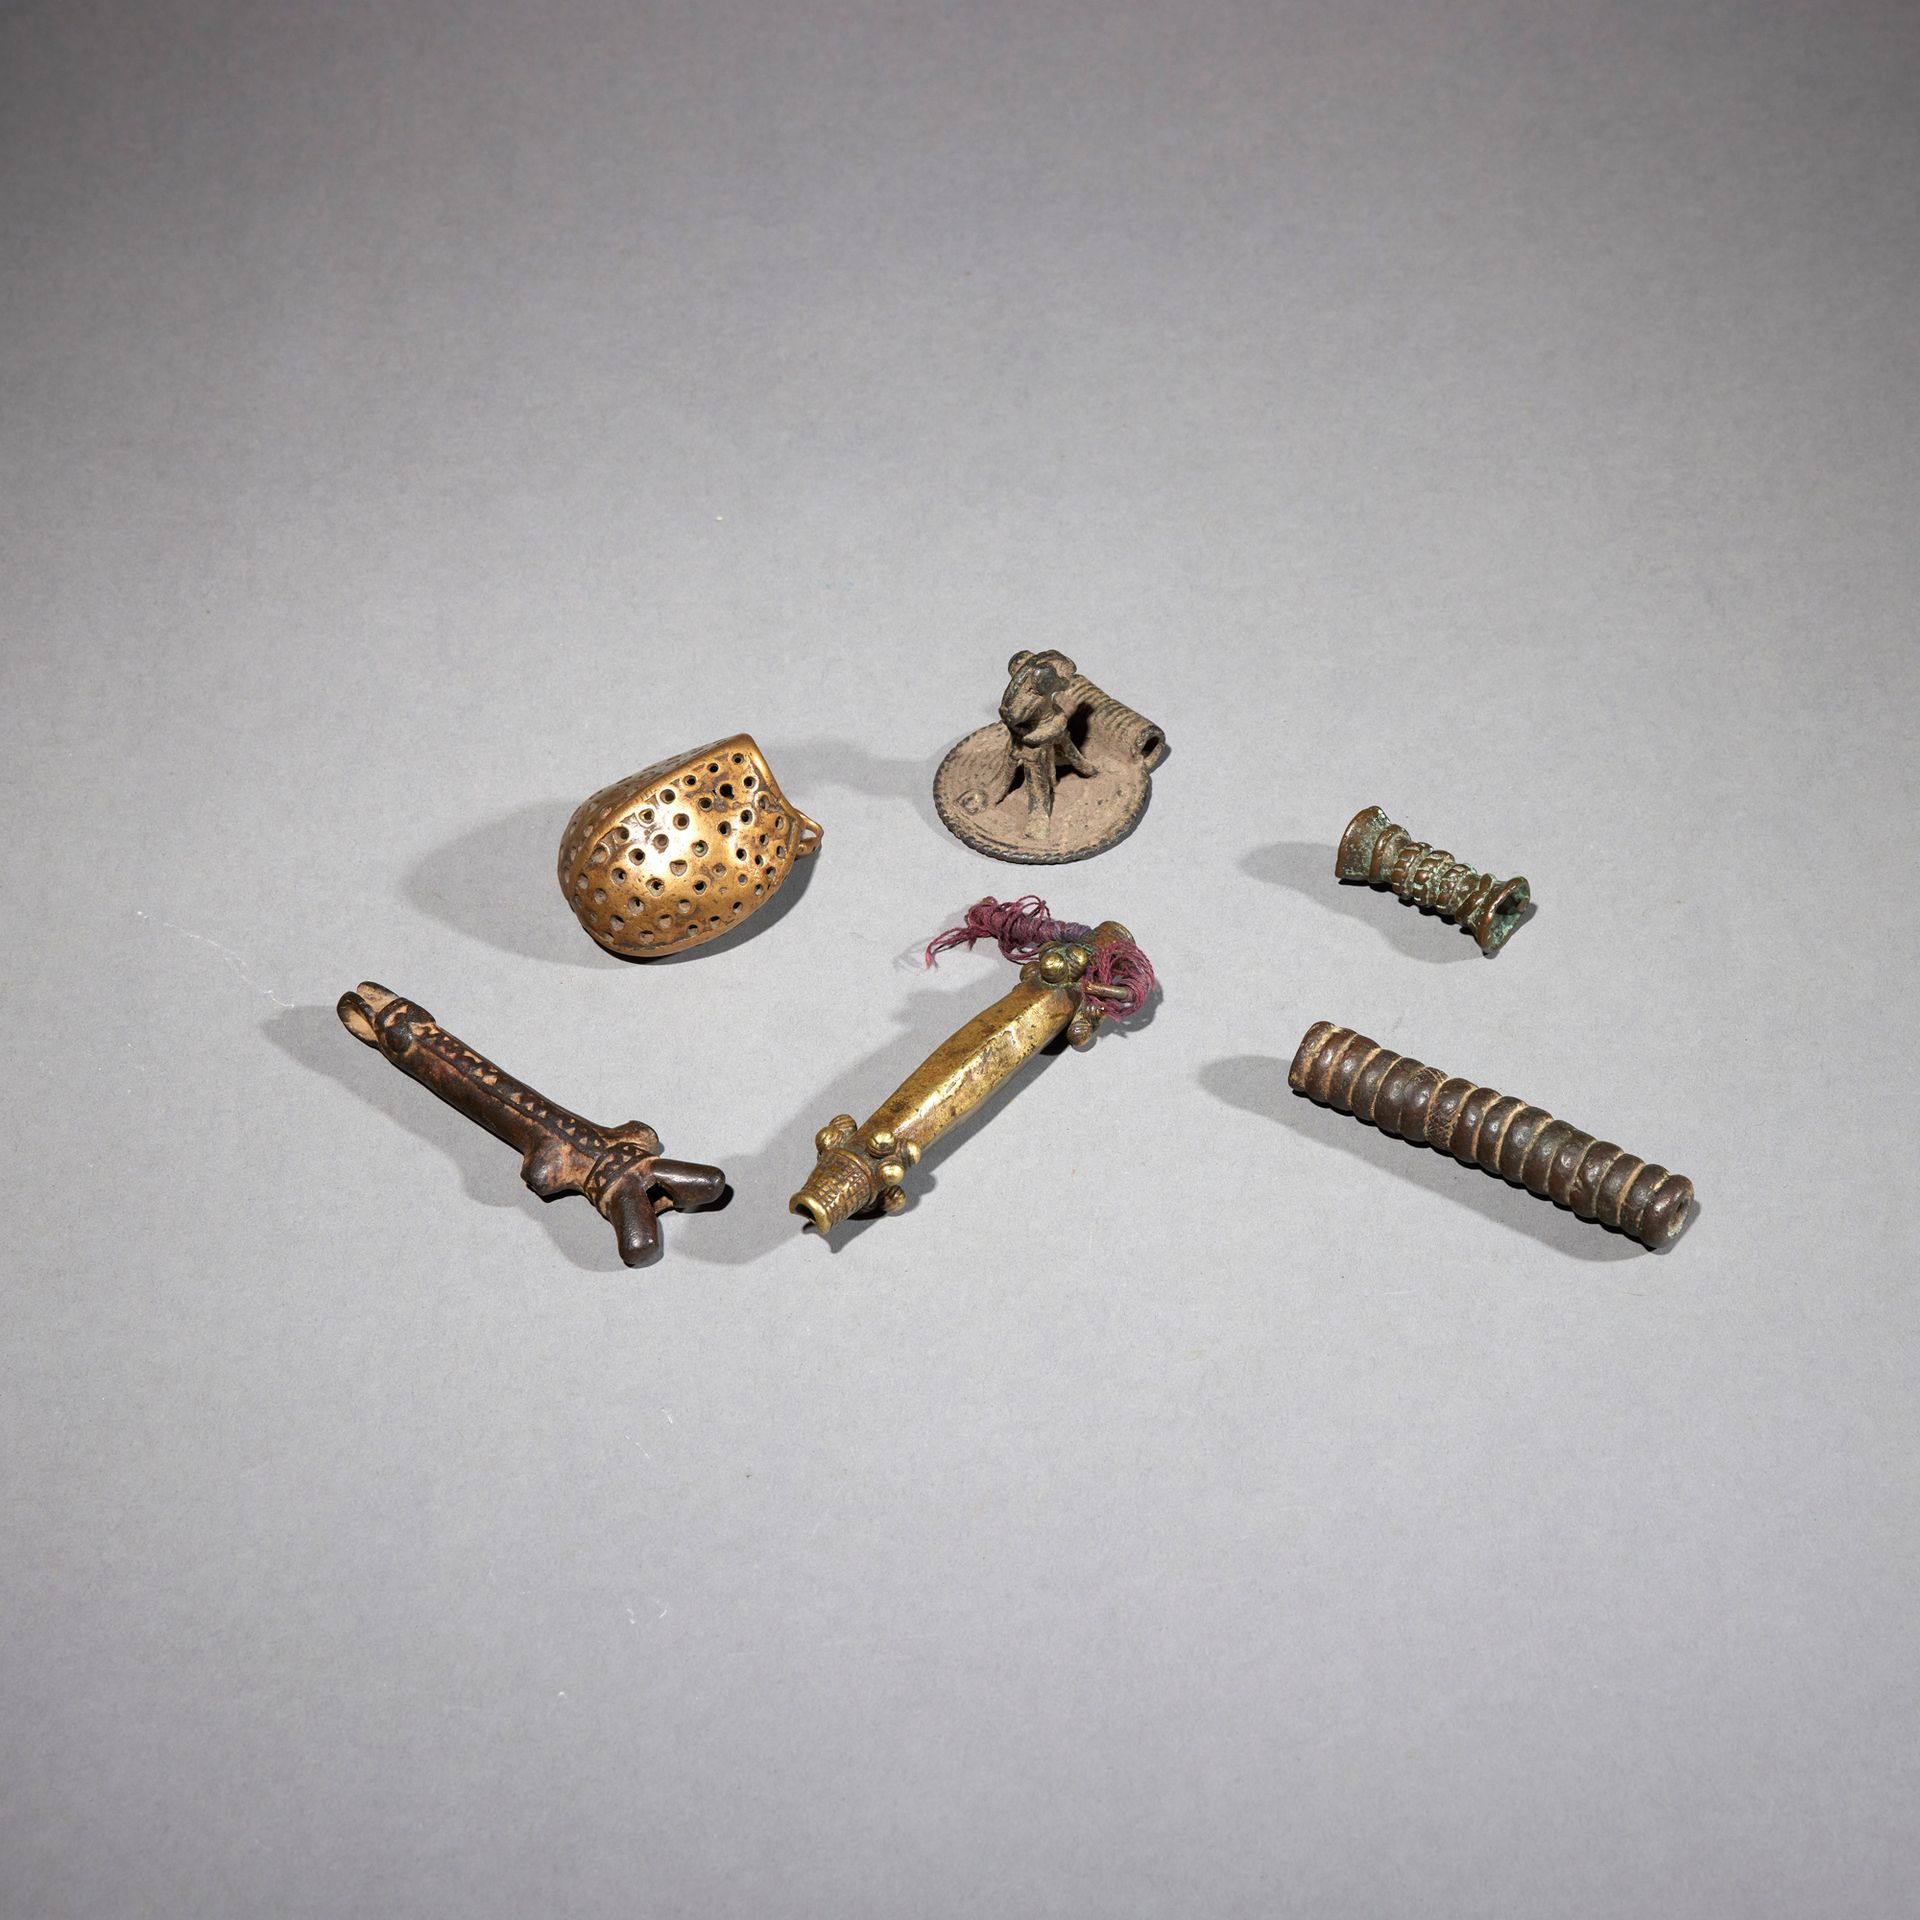 Null 六件人工制品

象牙海岸/布基那法索

铜质

长3.5至9.6厘米



一套六件青铜器，包括两个管状珠子和四个吊坠，包括一个哨子。